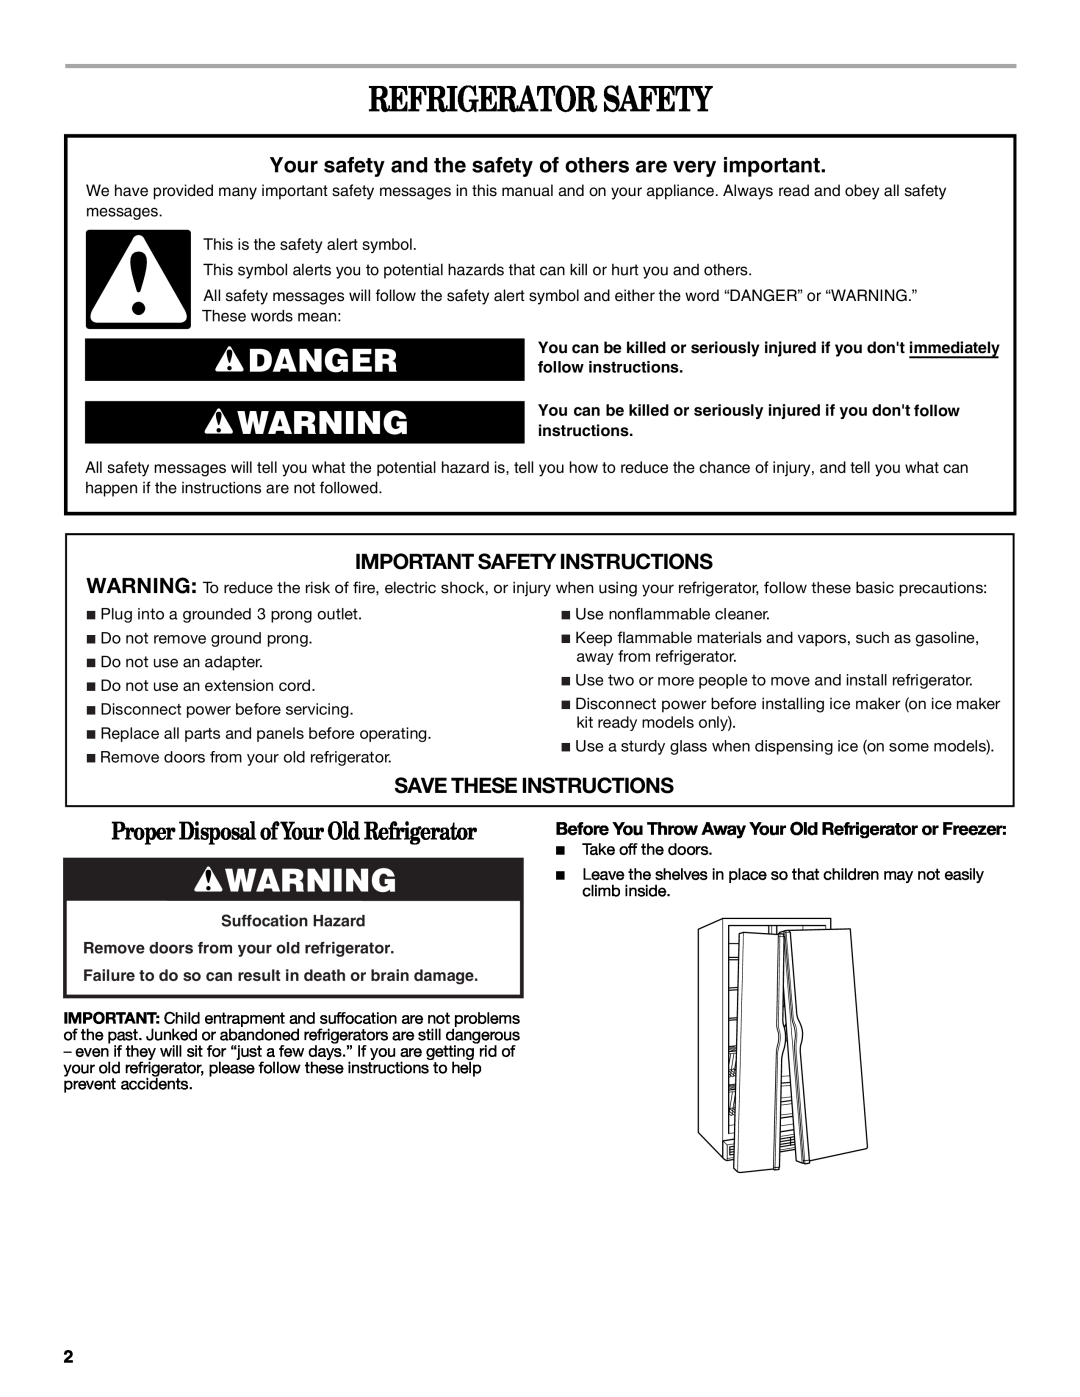 Whirlpool ED5LVAXV Refrigerator Safety, Danger, ProperDisposalofYourOld Refrigerator, Important Safety Instructions 